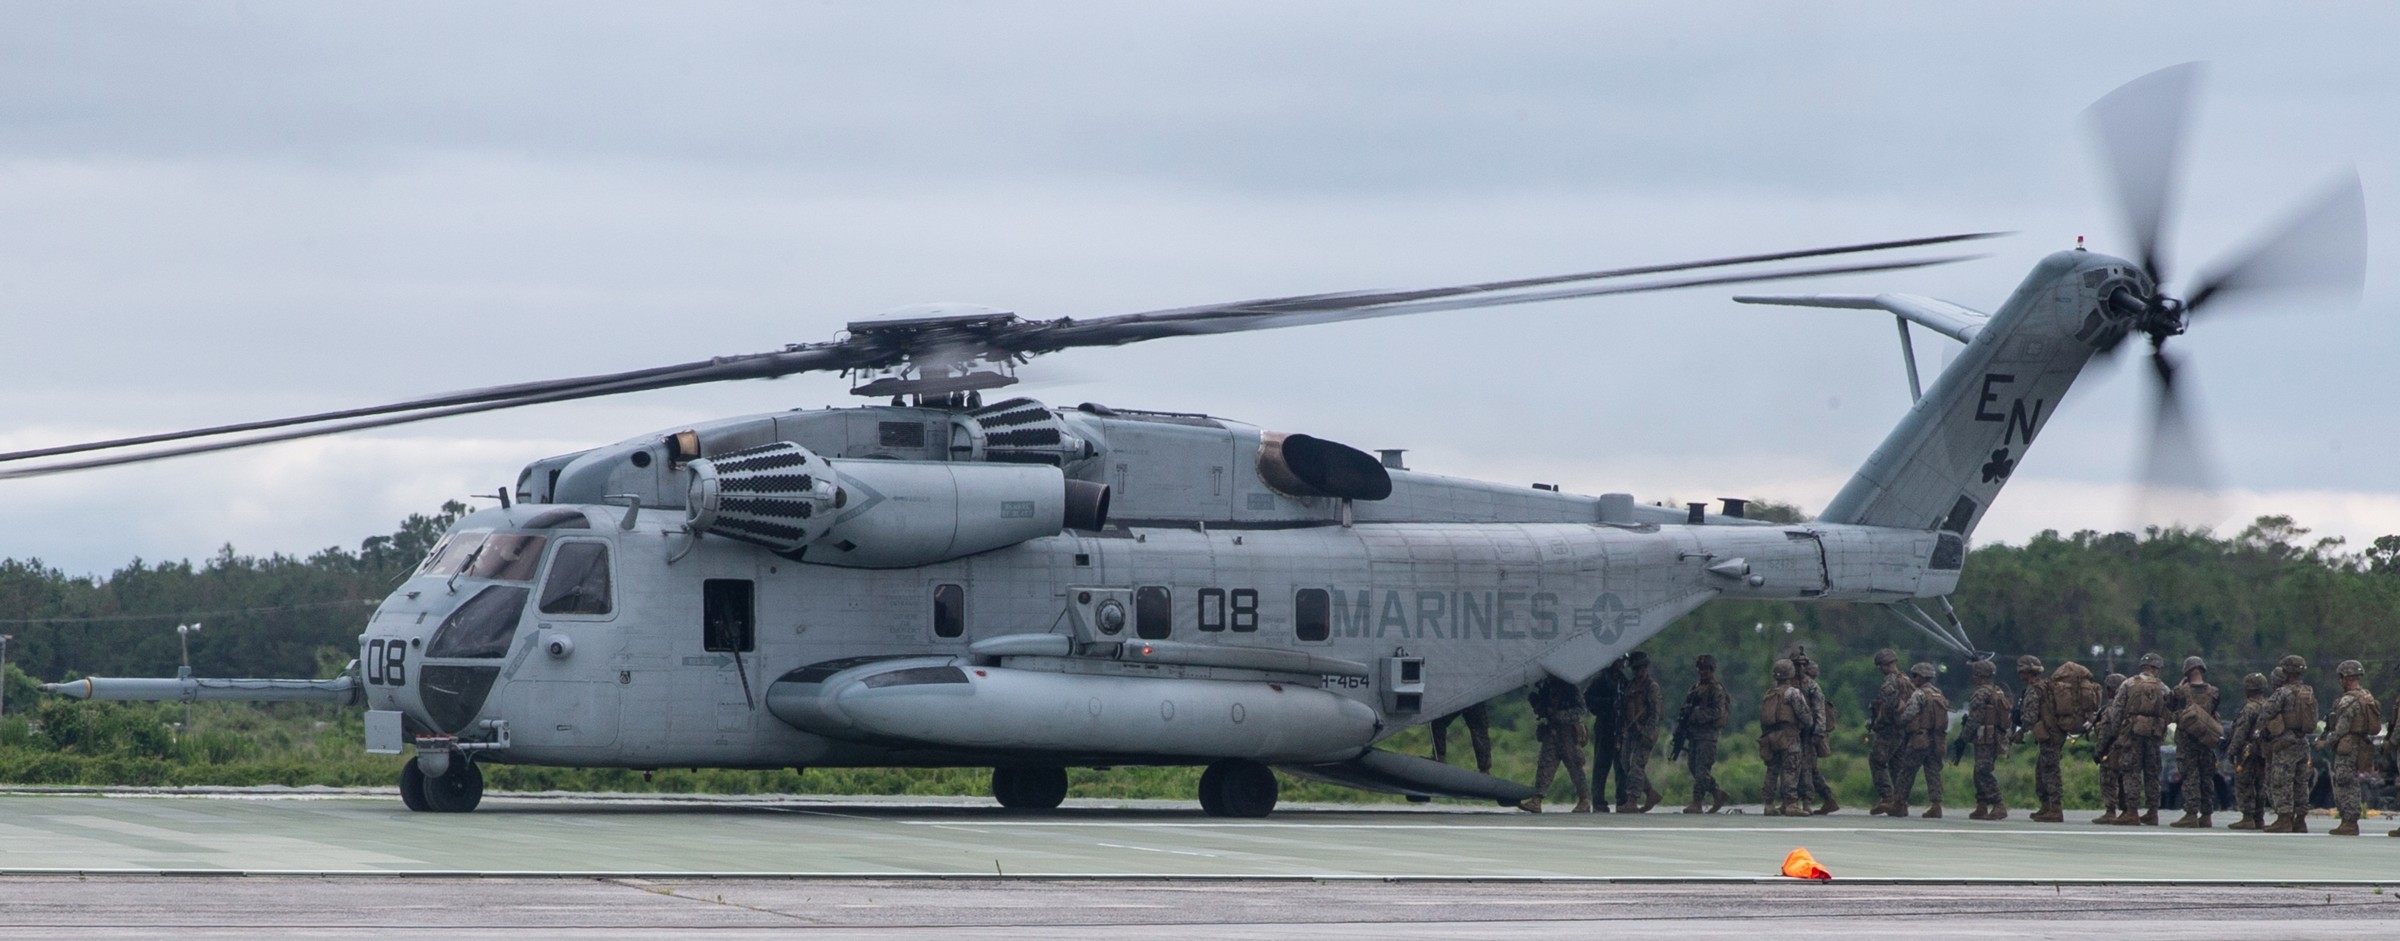 hmh-366 hammerheads marine heavy helicopter squadron usmc sikorsky ch-53e super stallion 87 bogue field